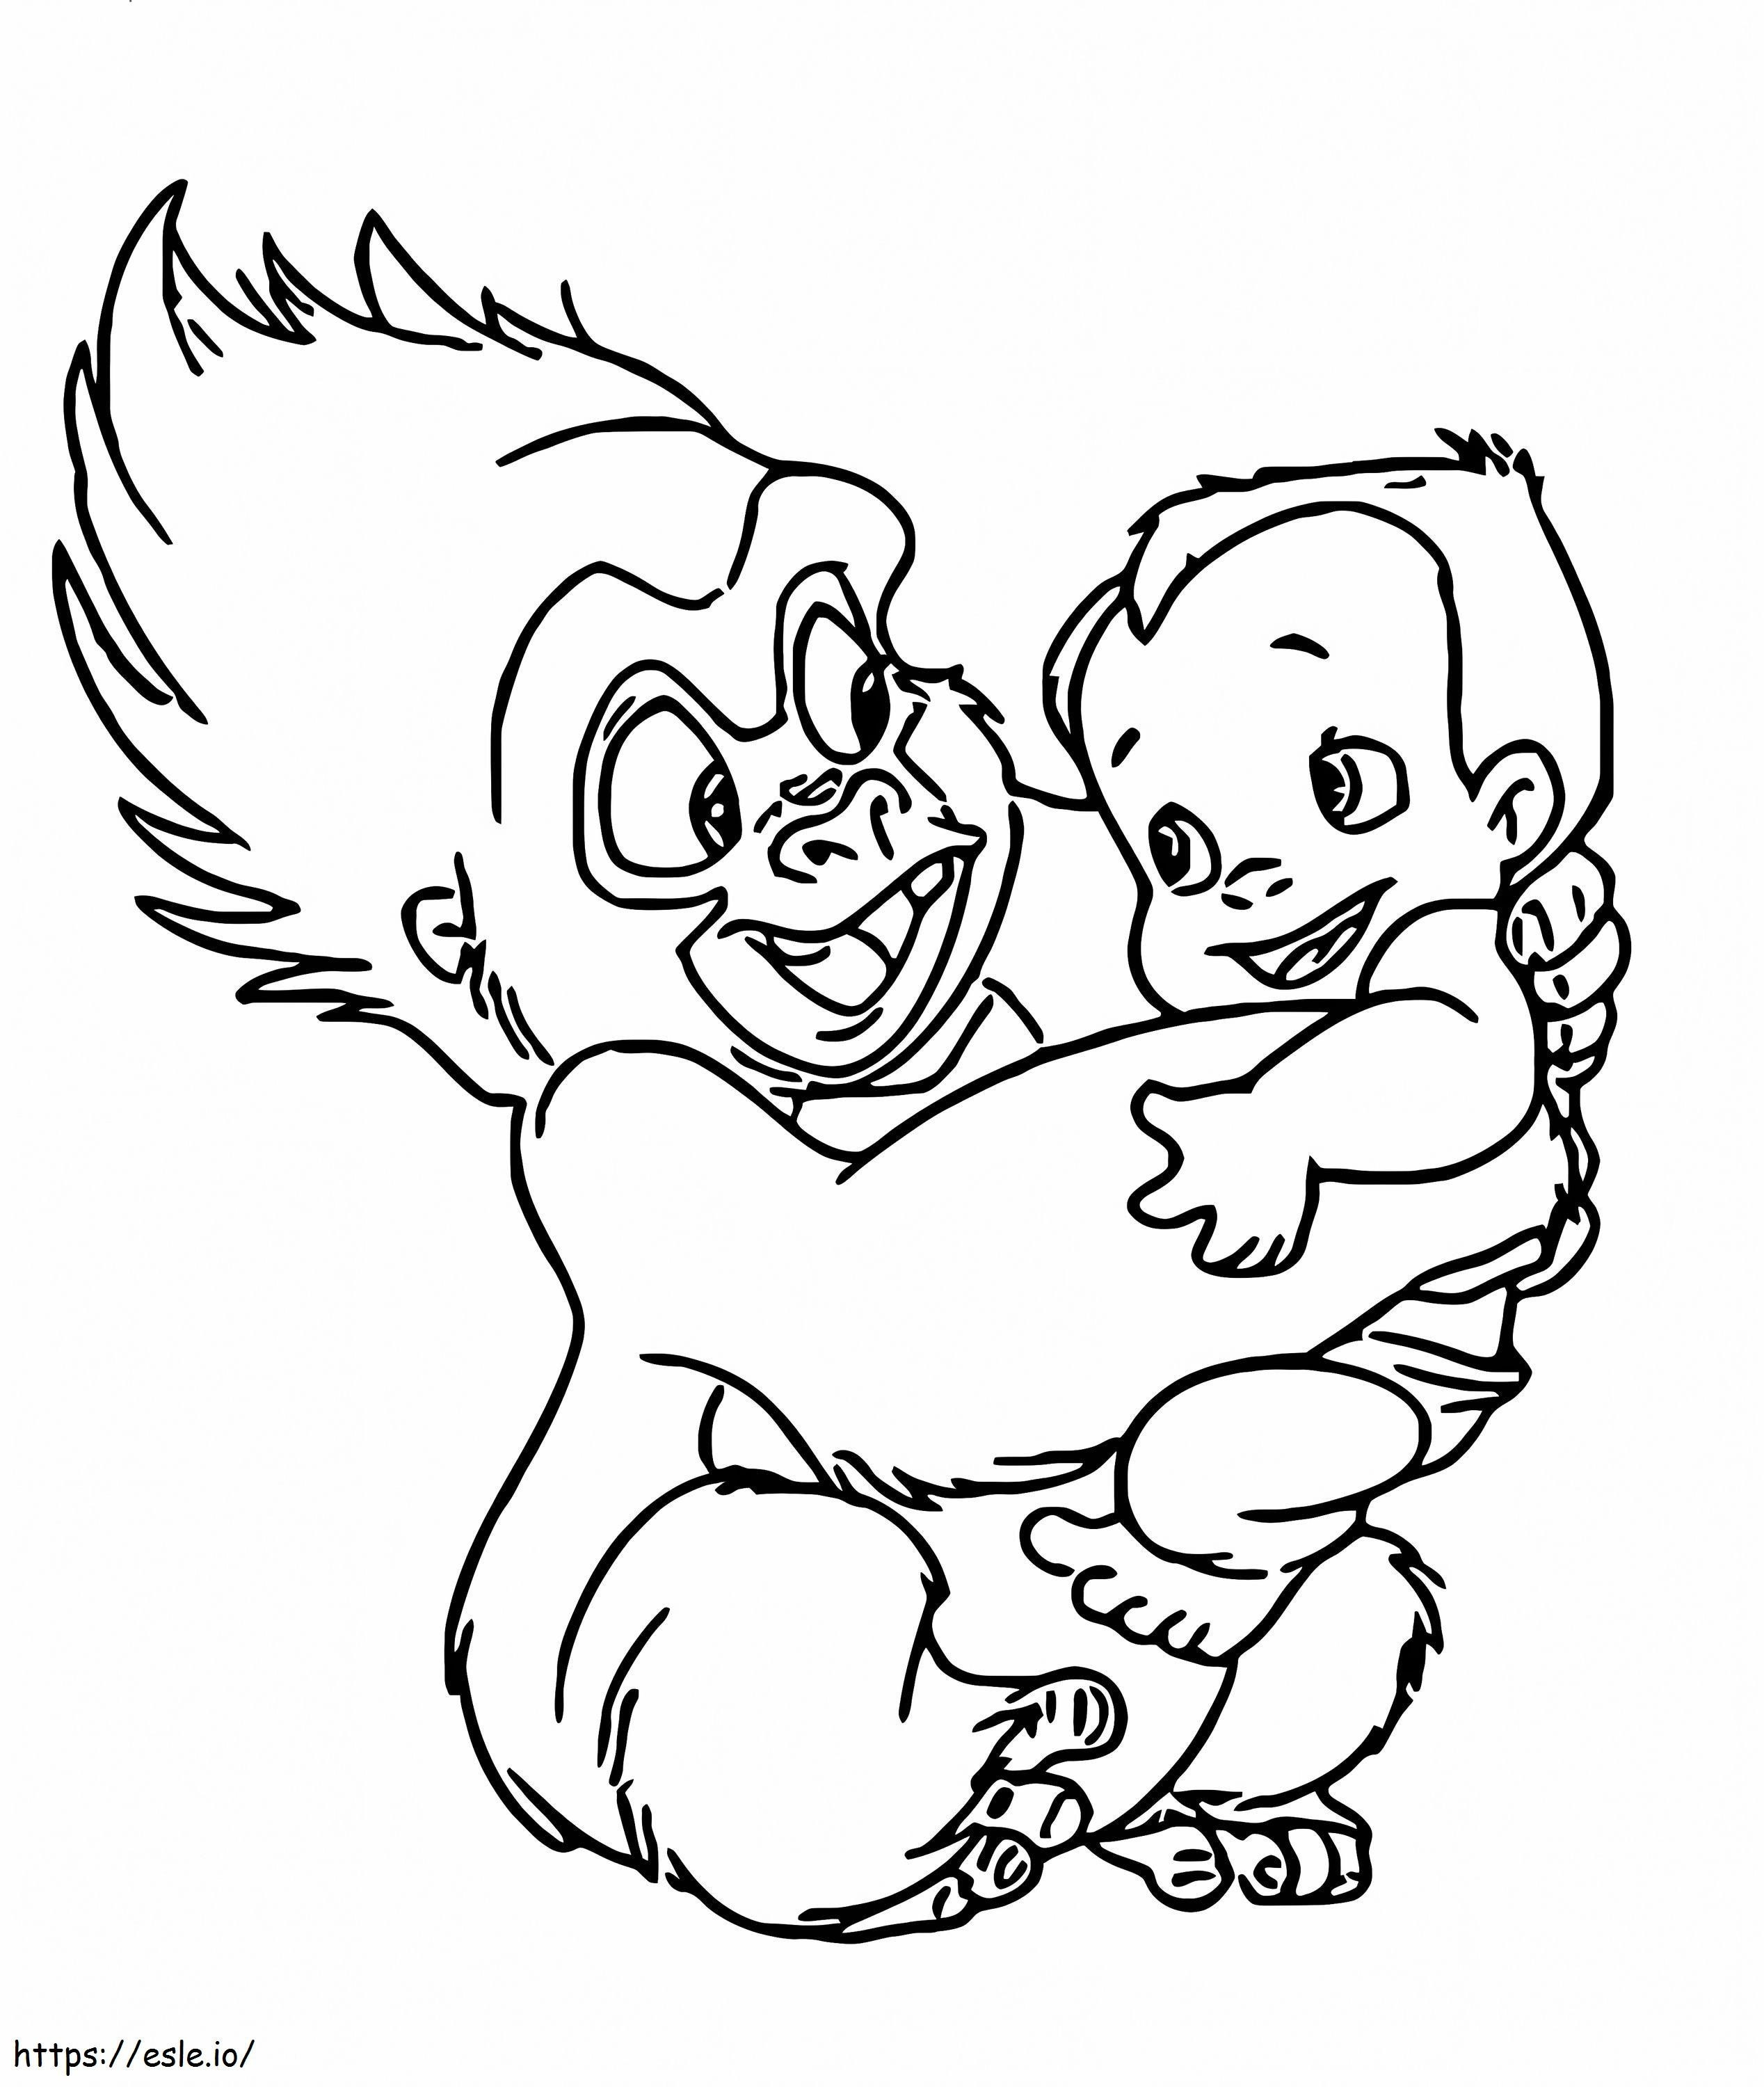  Imagem Natal Tarzan 2 Disney Baby C Pinterest para colorir